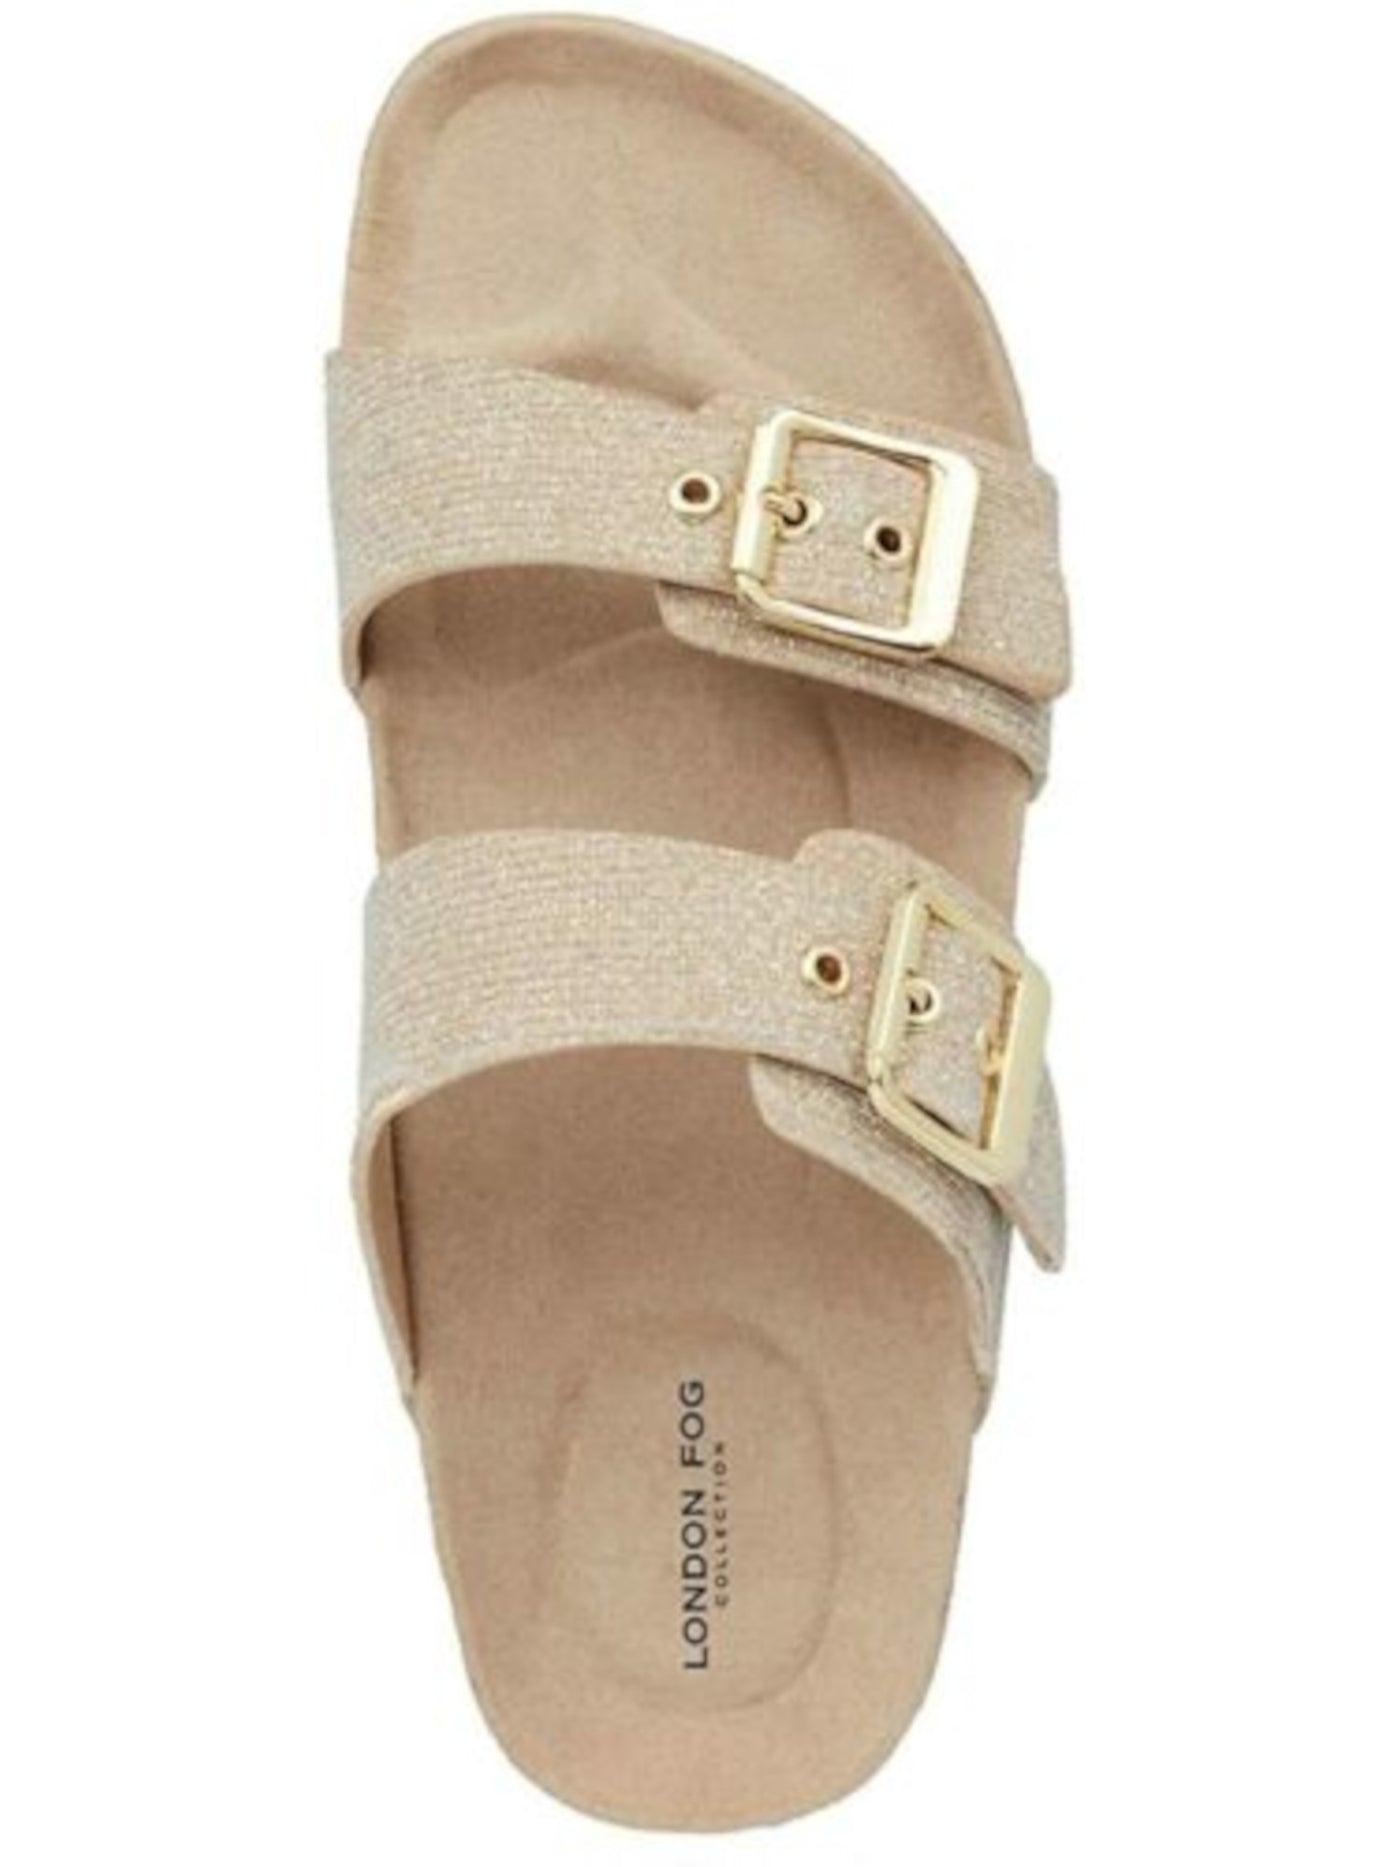 JONES NY Womens Gold Cork Jute Trim Buckle Accent Arch Support Weslee Round Toe Platform Slip On Slide Sandals Shoes 8 M